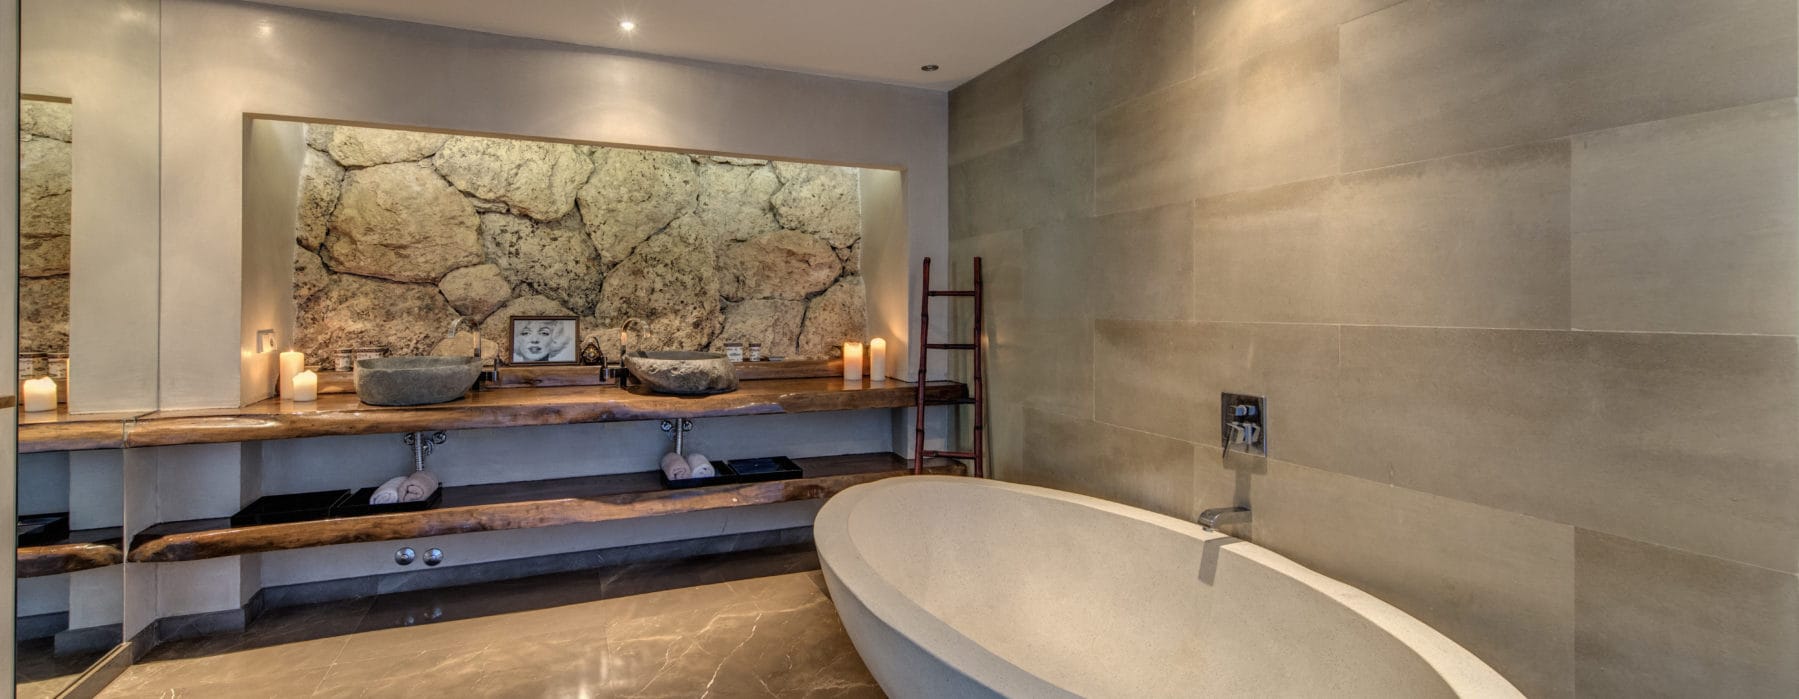 Bathroom with stone design wall and oval bathtub